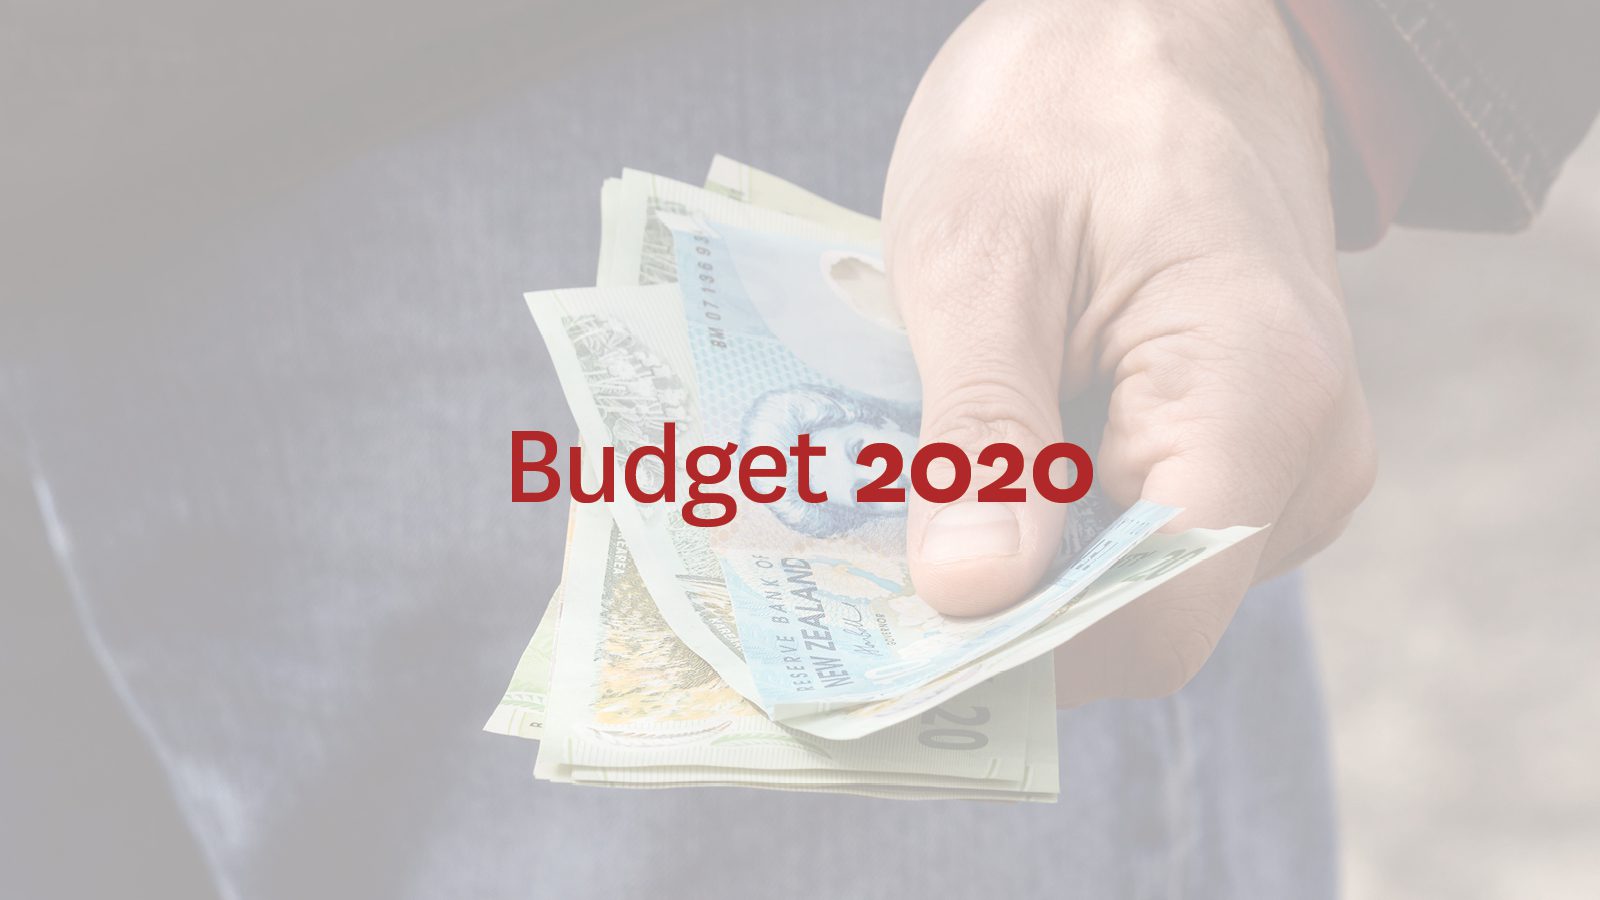 Blog Post - Visionwest Response to Budget 2020